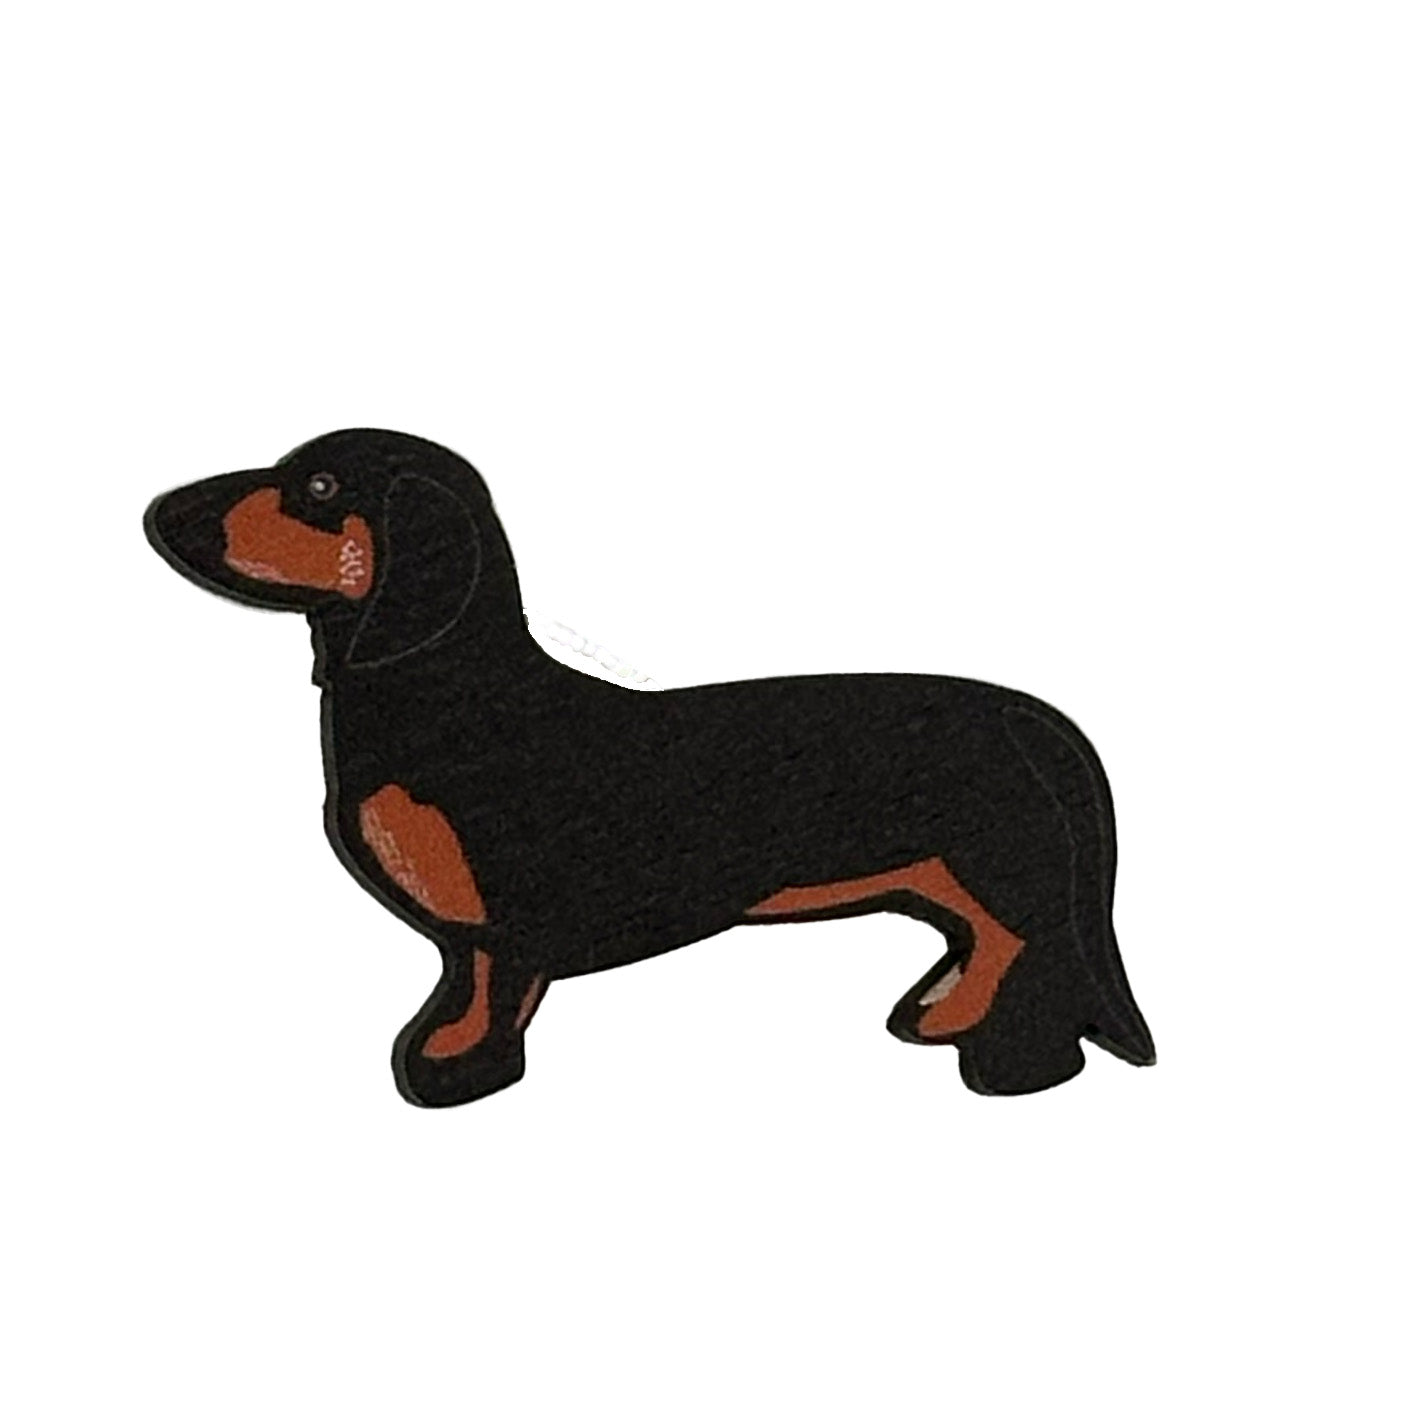 Dachshund Dog Badge - Black and Tan